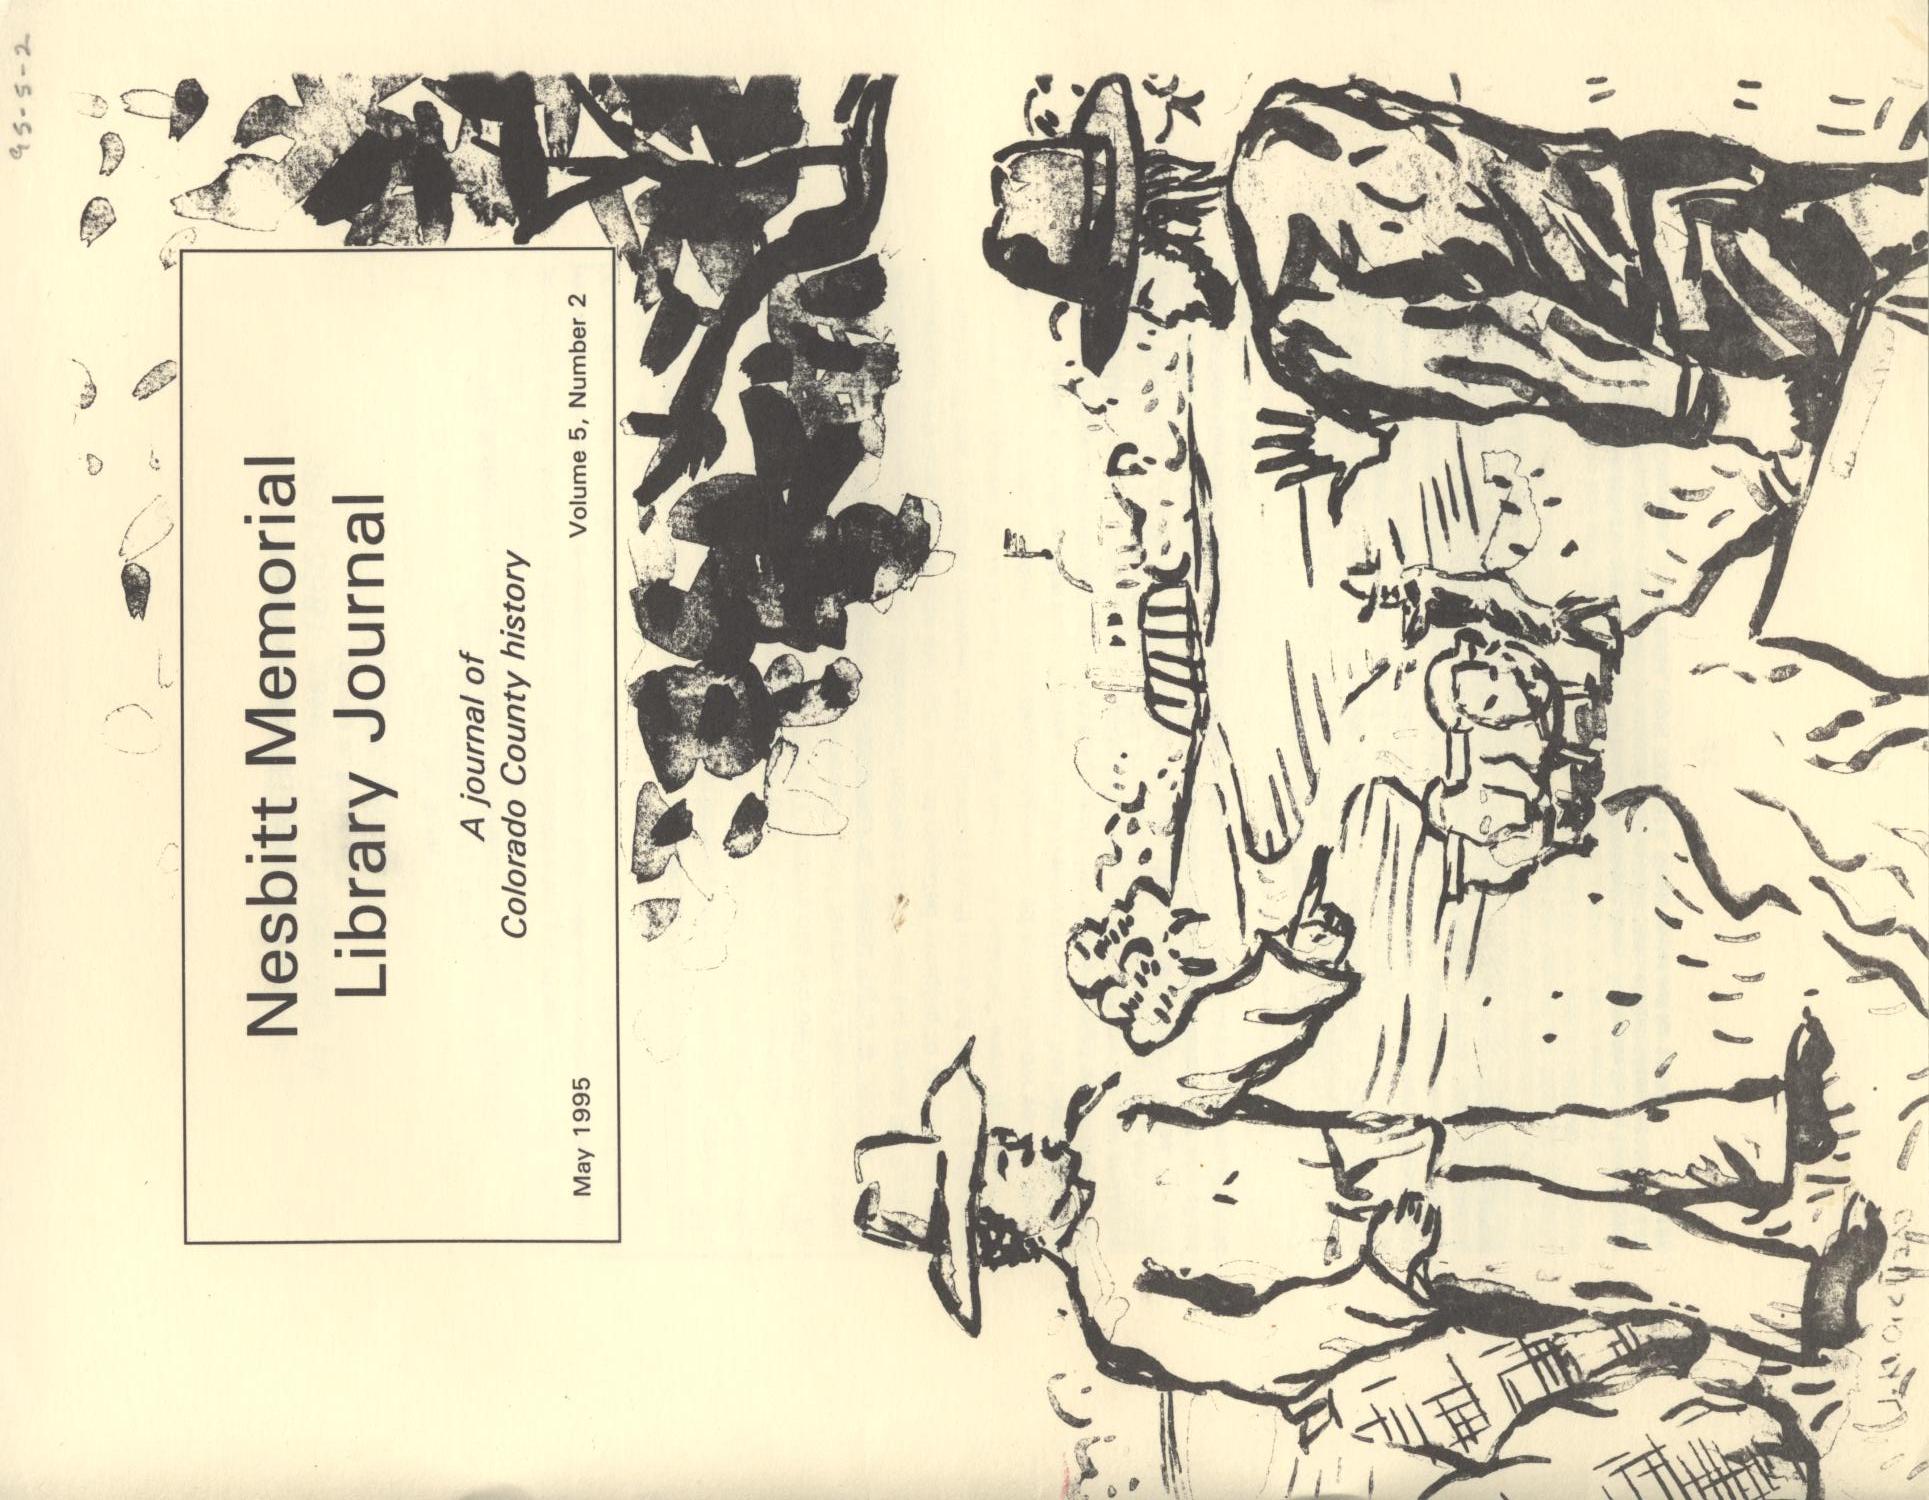 Nesbitt Memorial Library Journal, Volume 5, Number 2, May 1995
                                                
                                                    Front Cover
                                                